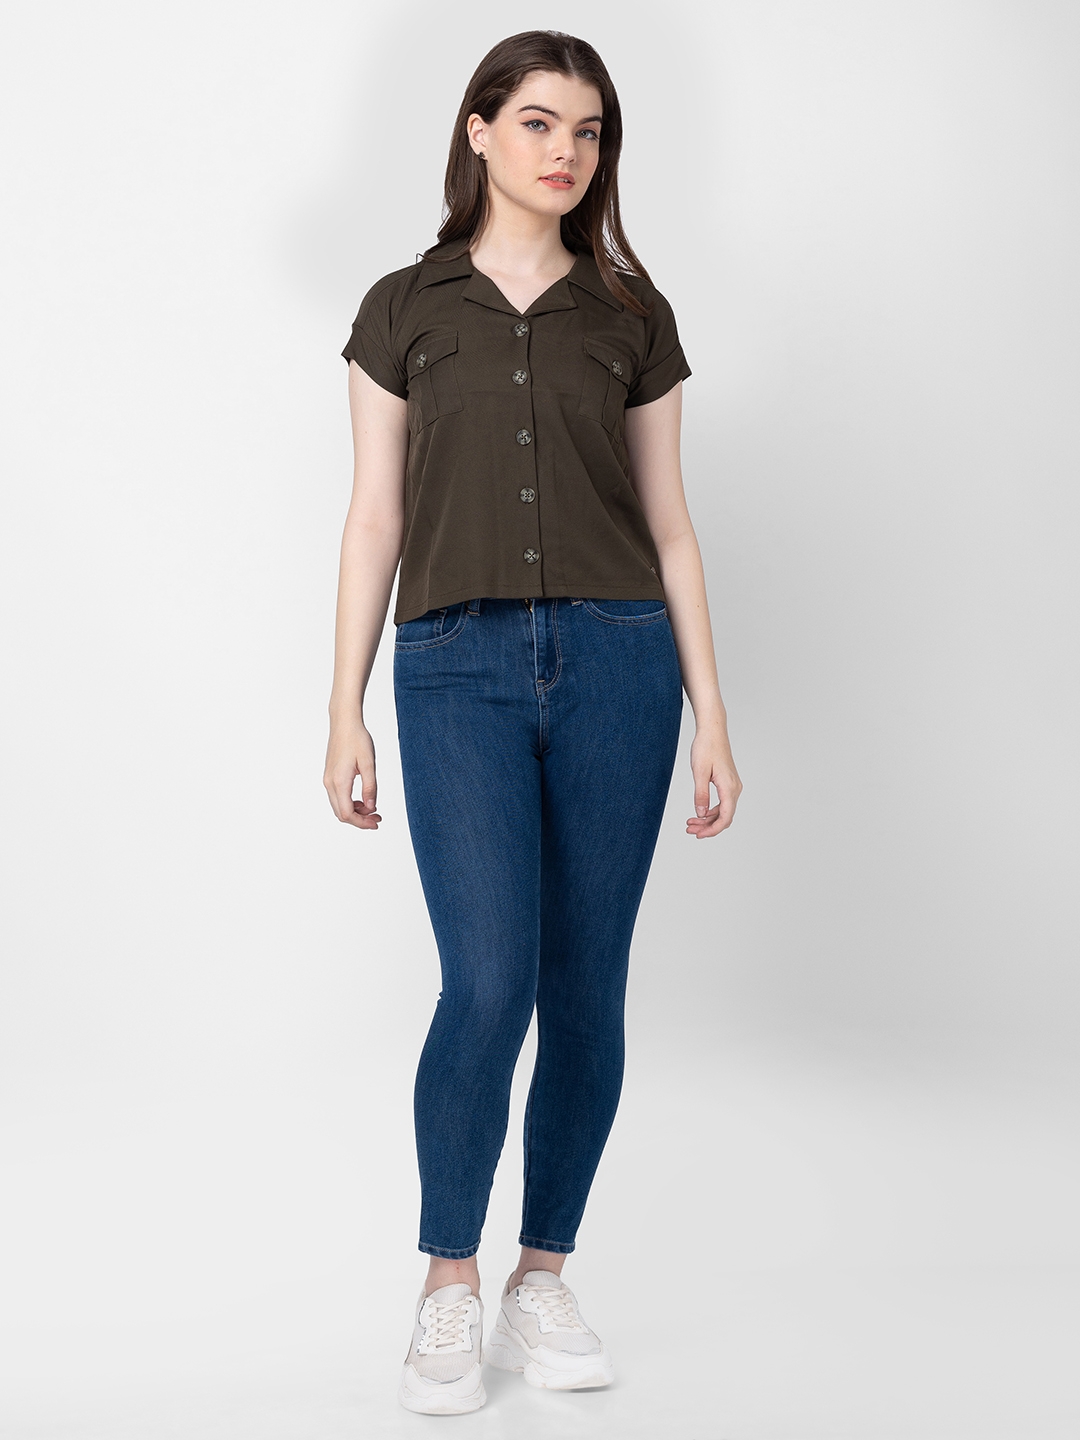 Spykar Women Olive Cotton Slim Fit Half Sleeve Plain Shirt